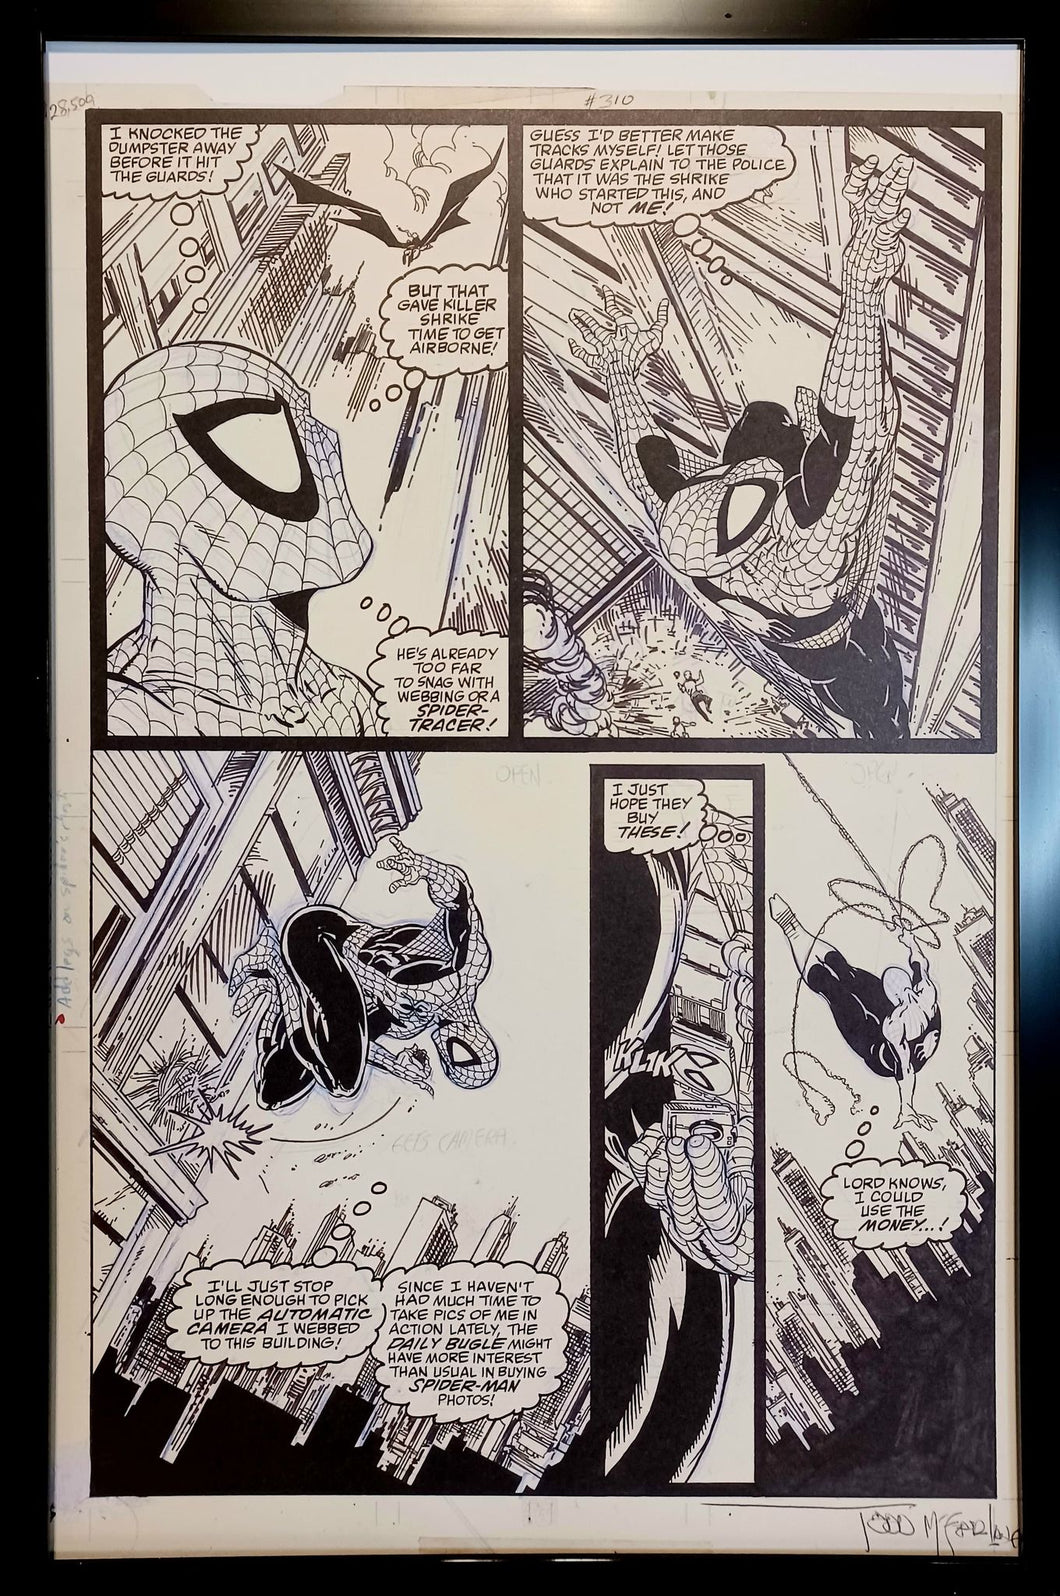 Amazing Spider-Man #310 pg. 5 by Todd McFarlane 11x17 FRAMED Original Art Print Comic Poster